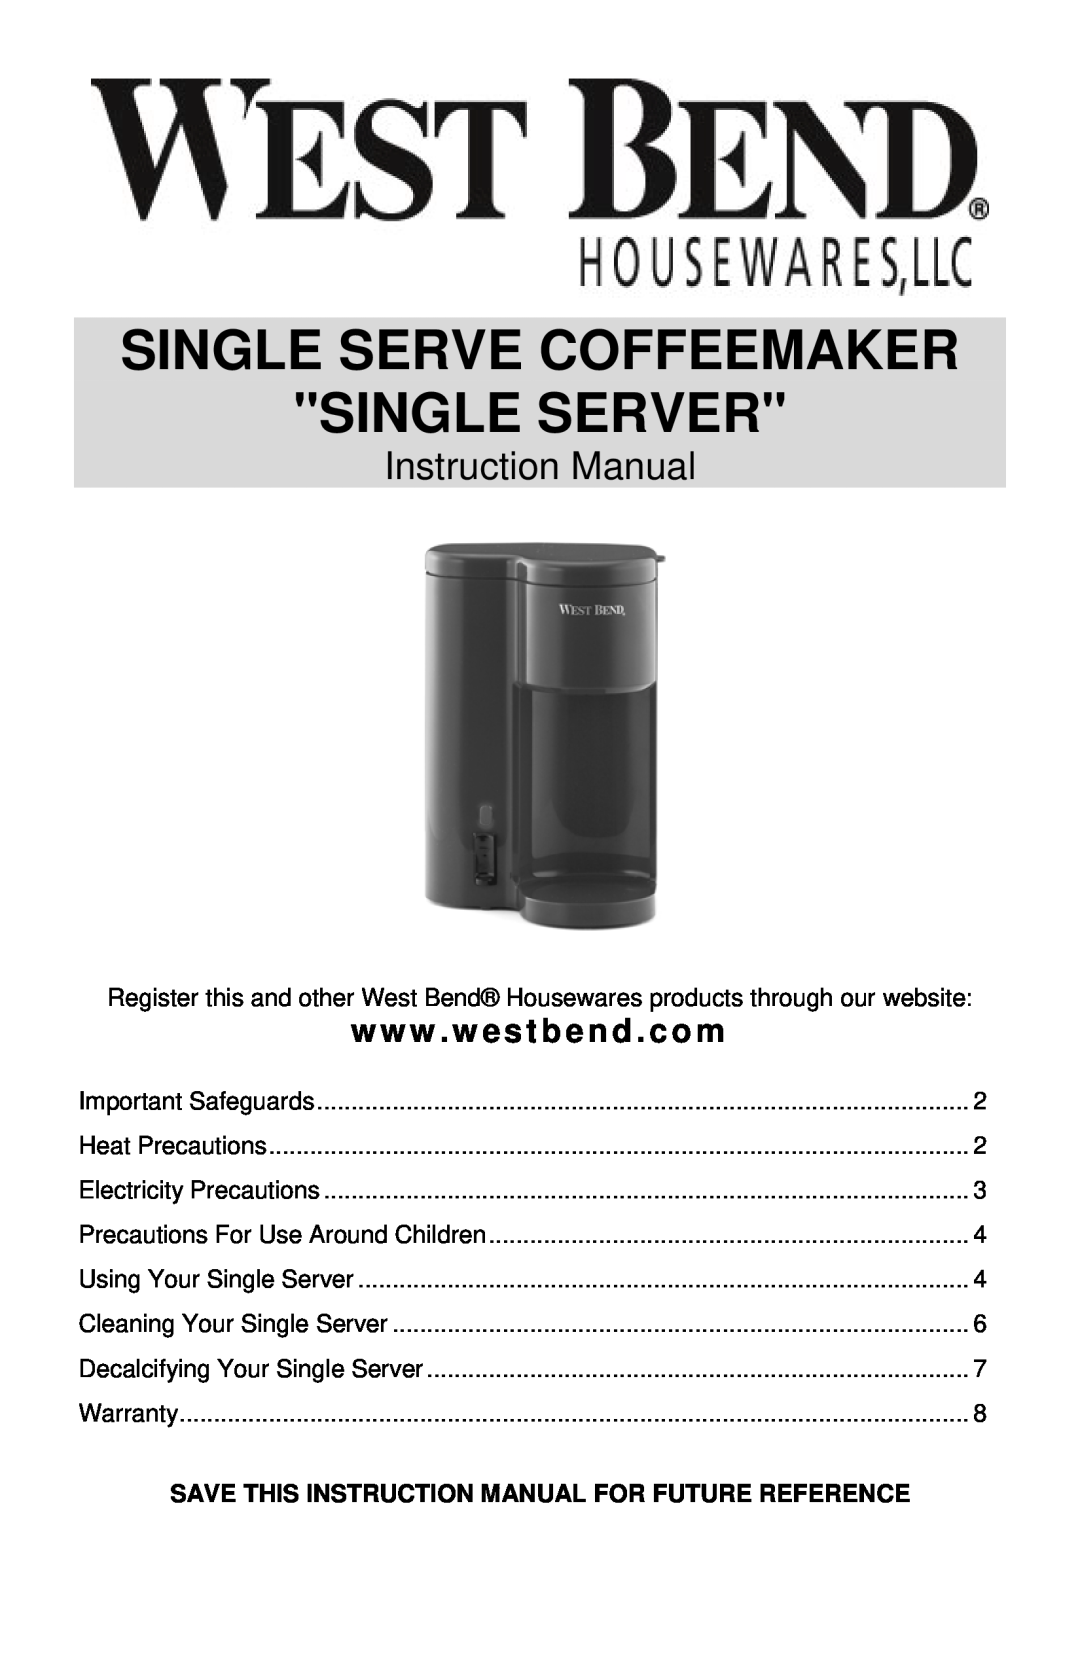 West Bend SINGLE SERVE COFFEEMAKER instruction manual Single Serve Coffeemaker Single Server, www . westbend . com 